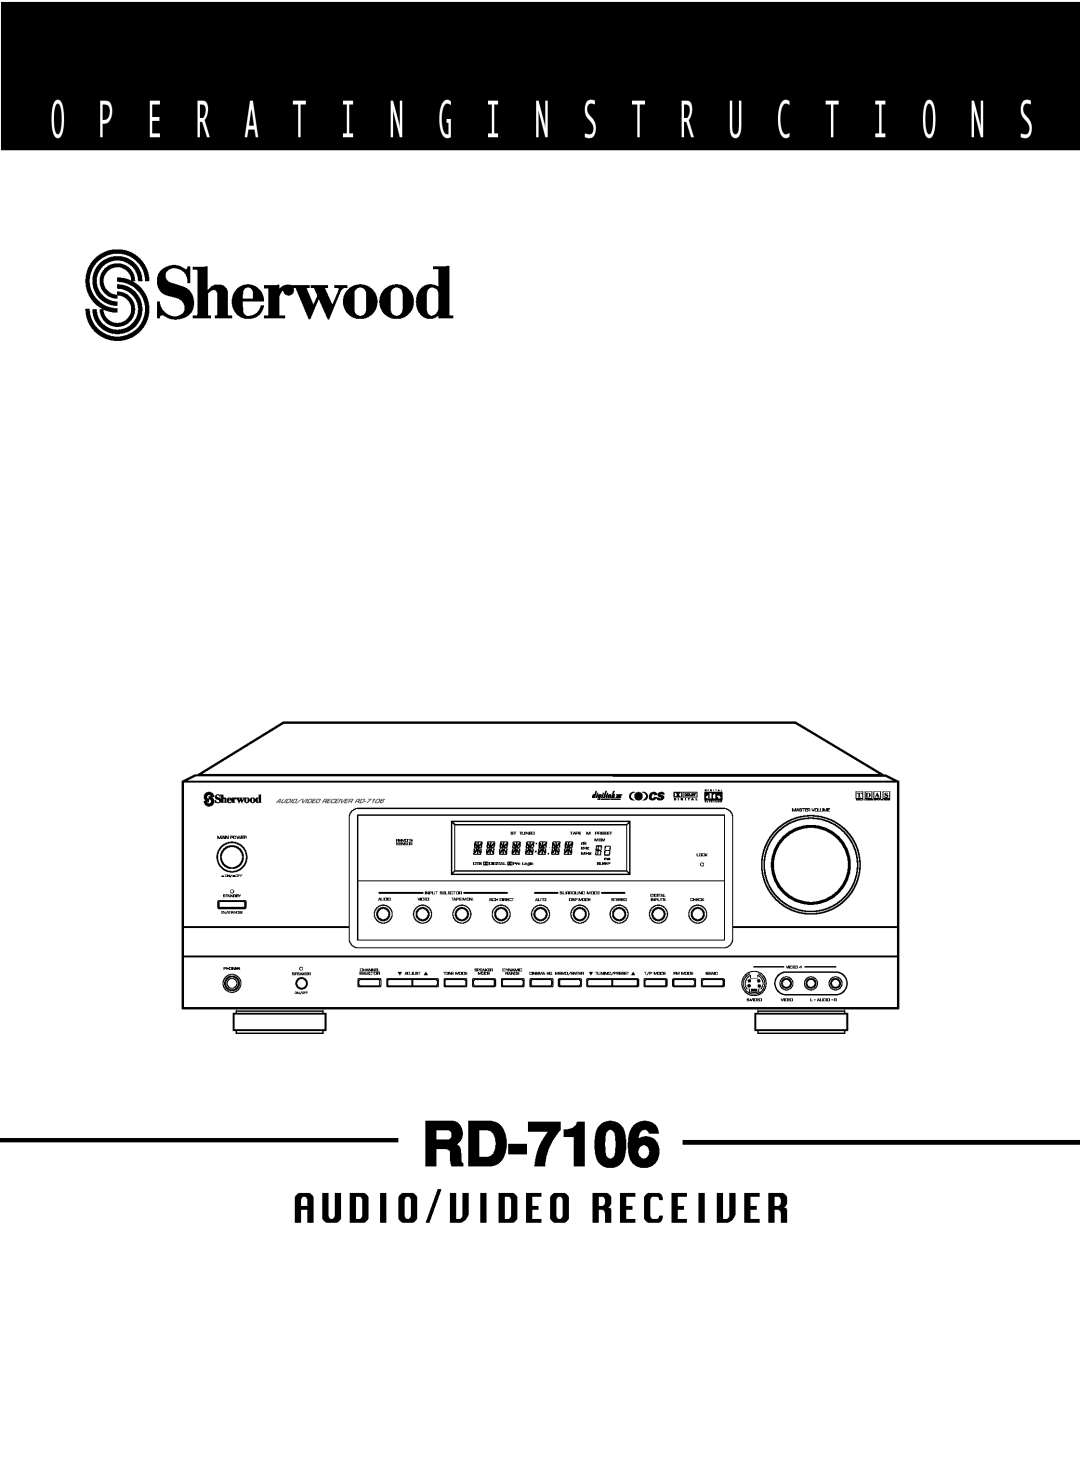 Sherwood RD-7106 manual O P E R A T I N G I N S T R U C T I O N S, Audio/Video Receiver, T D A S 